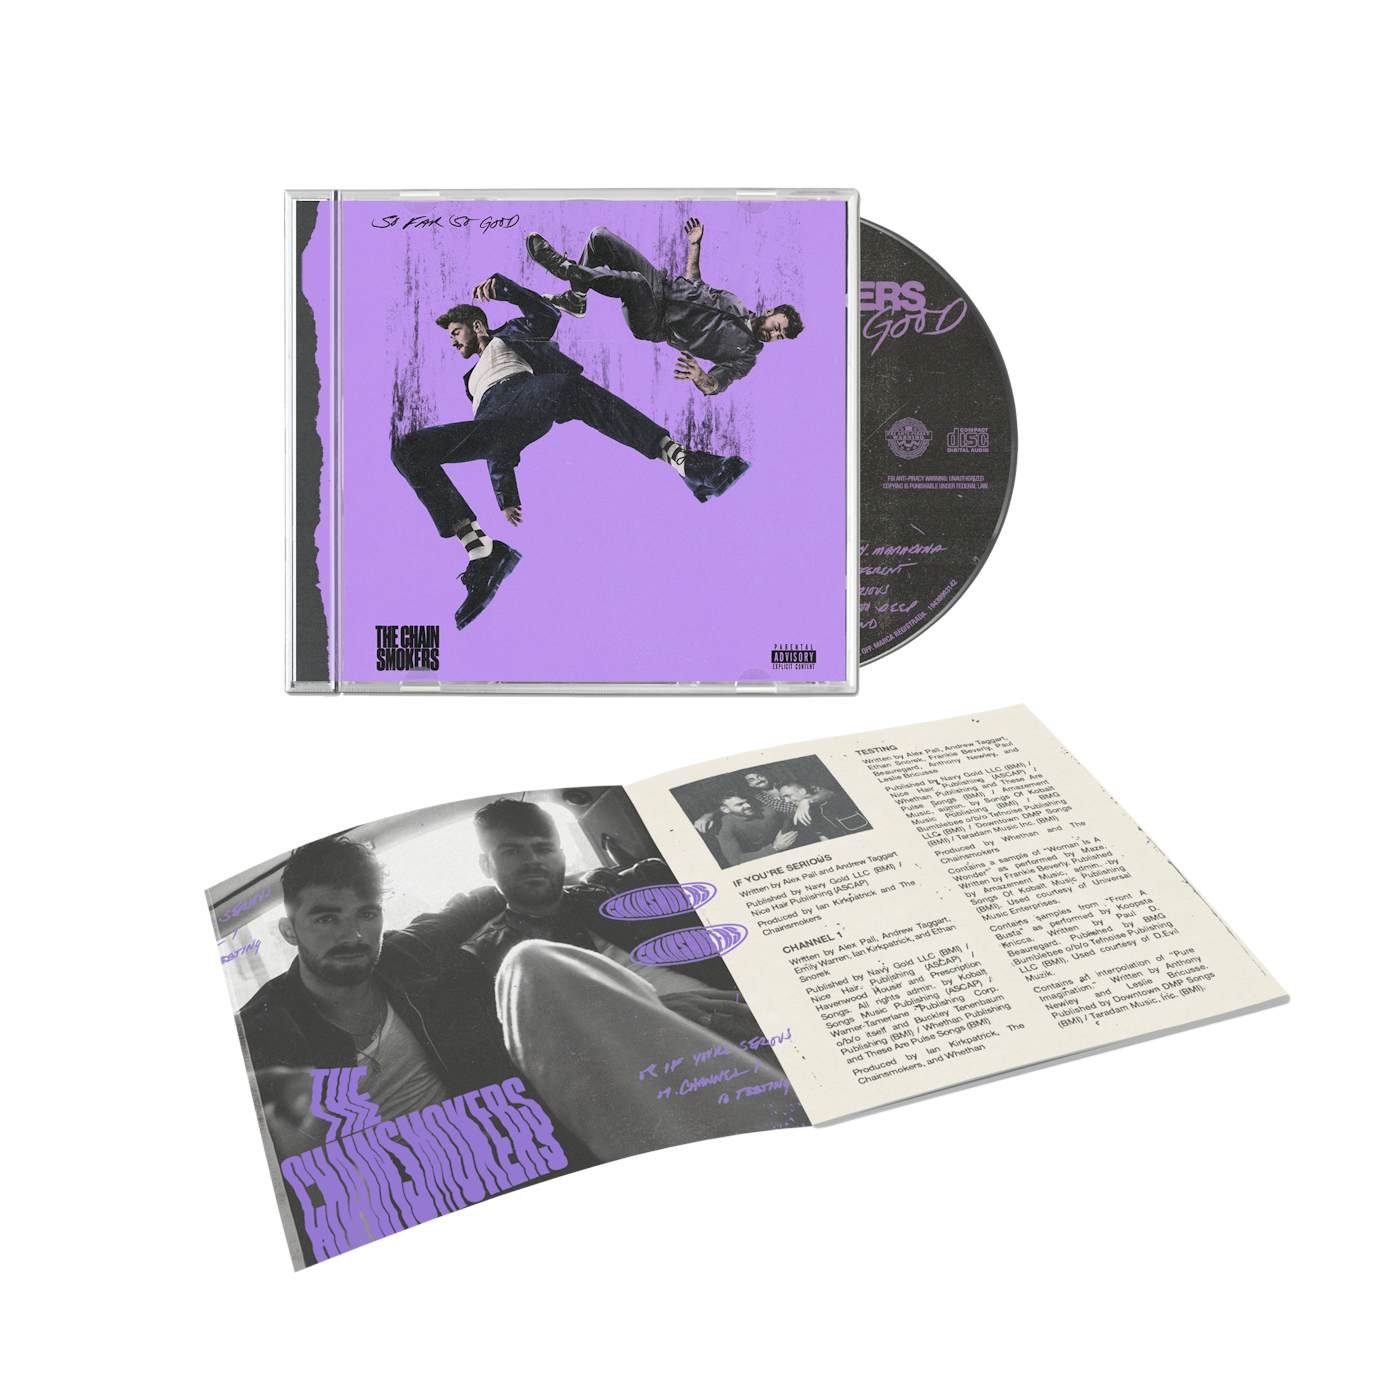 The Chainsmokers - "So Far So Good" CD